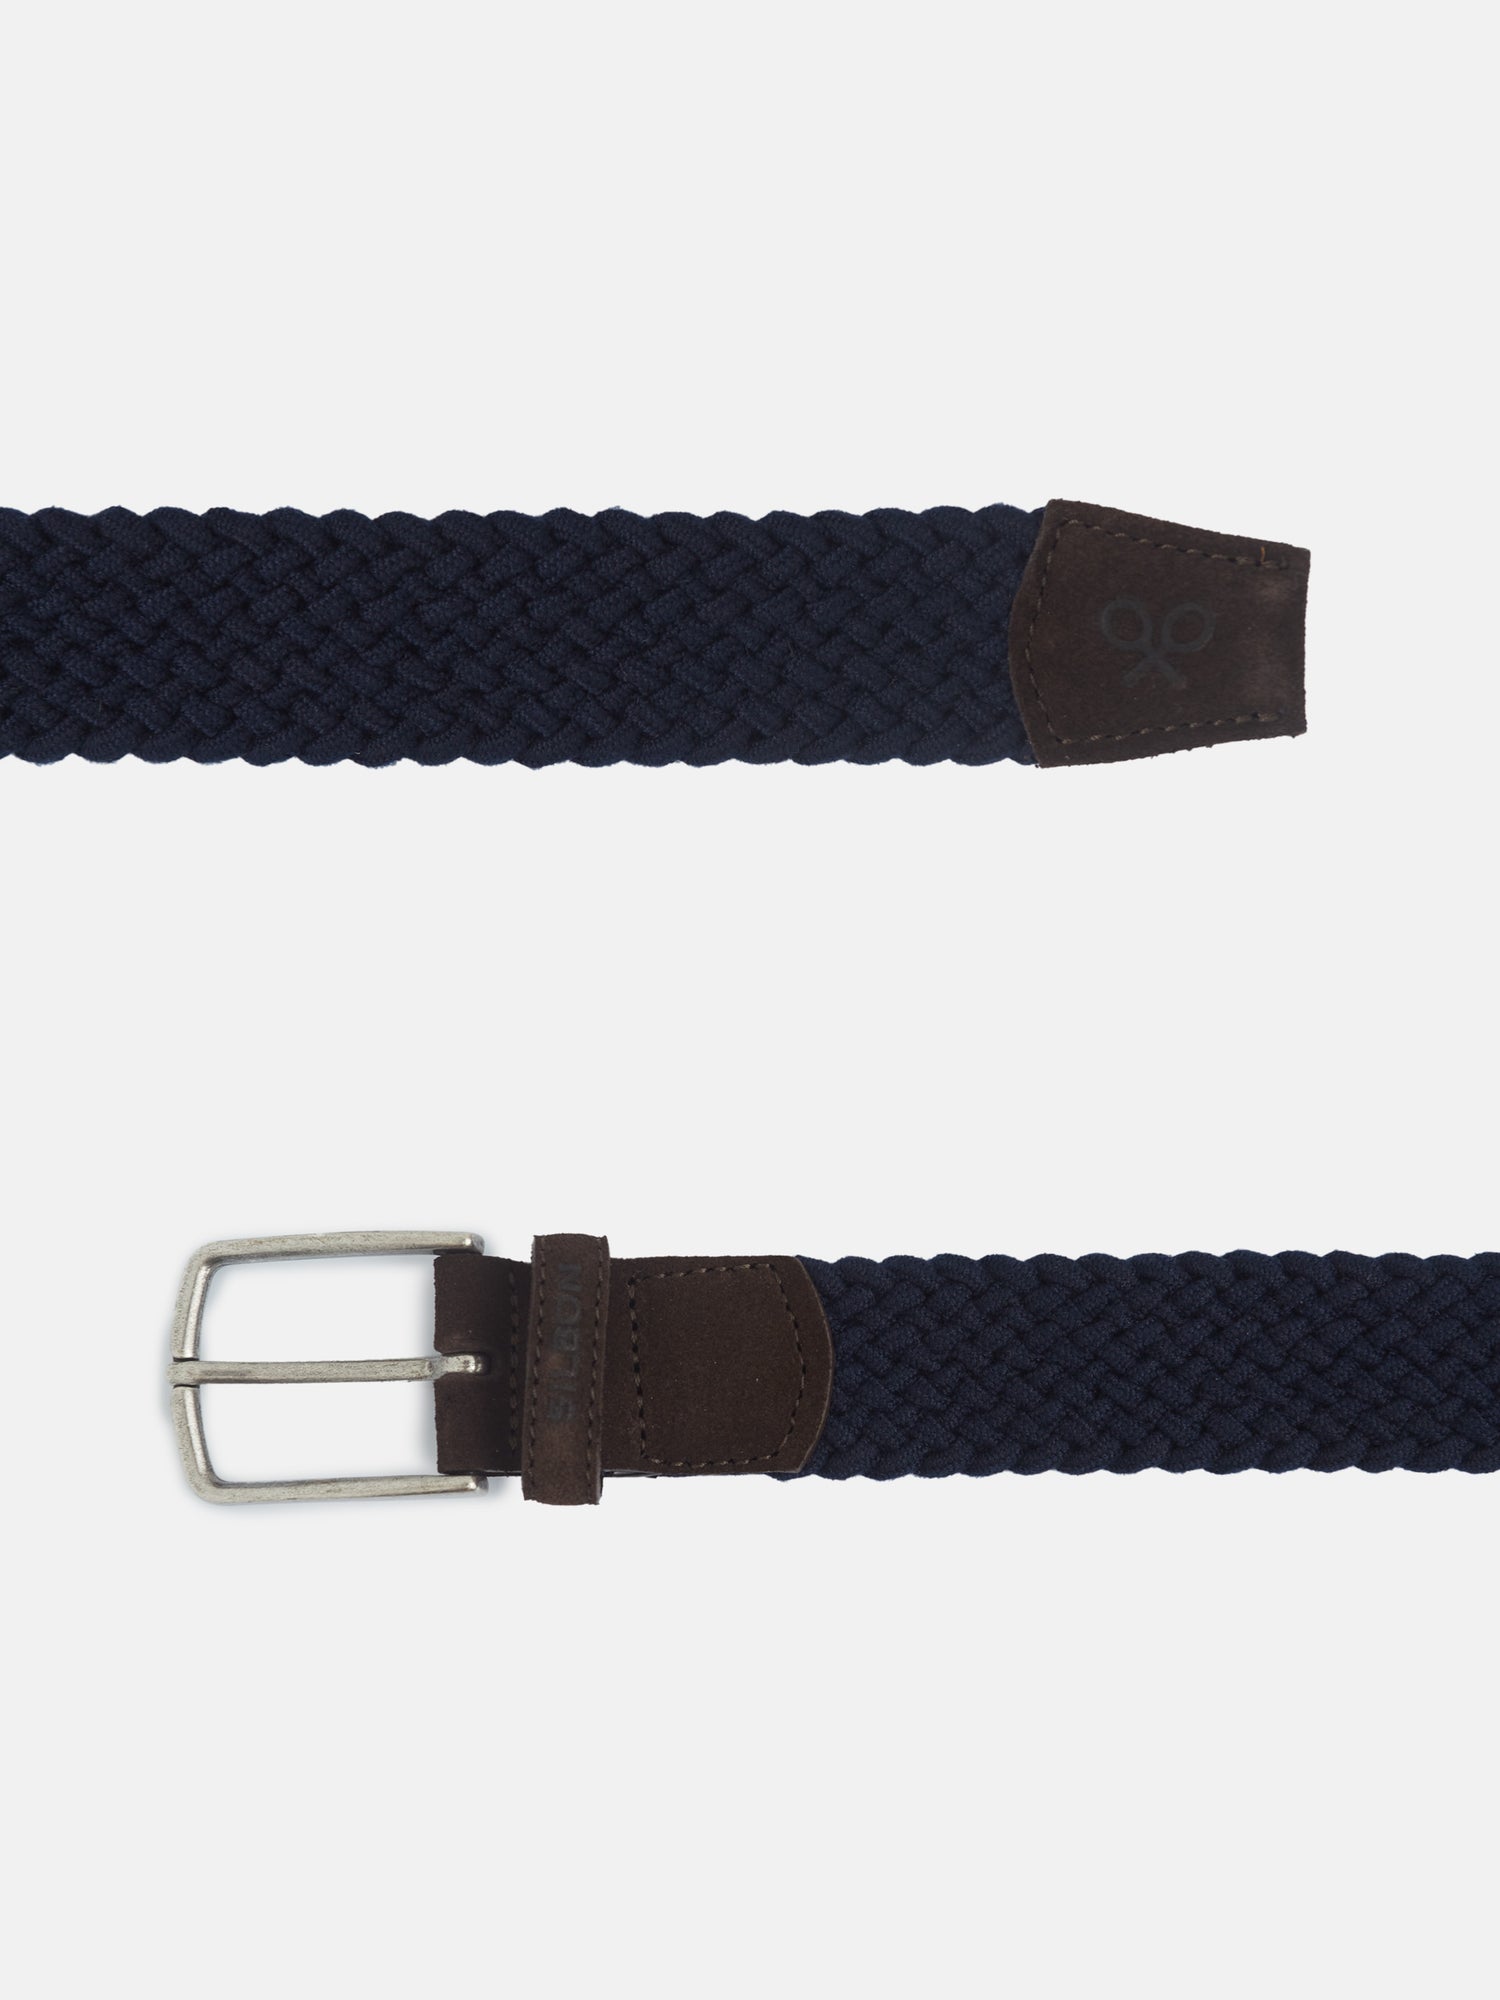 Cinturon elastico trenzado azul